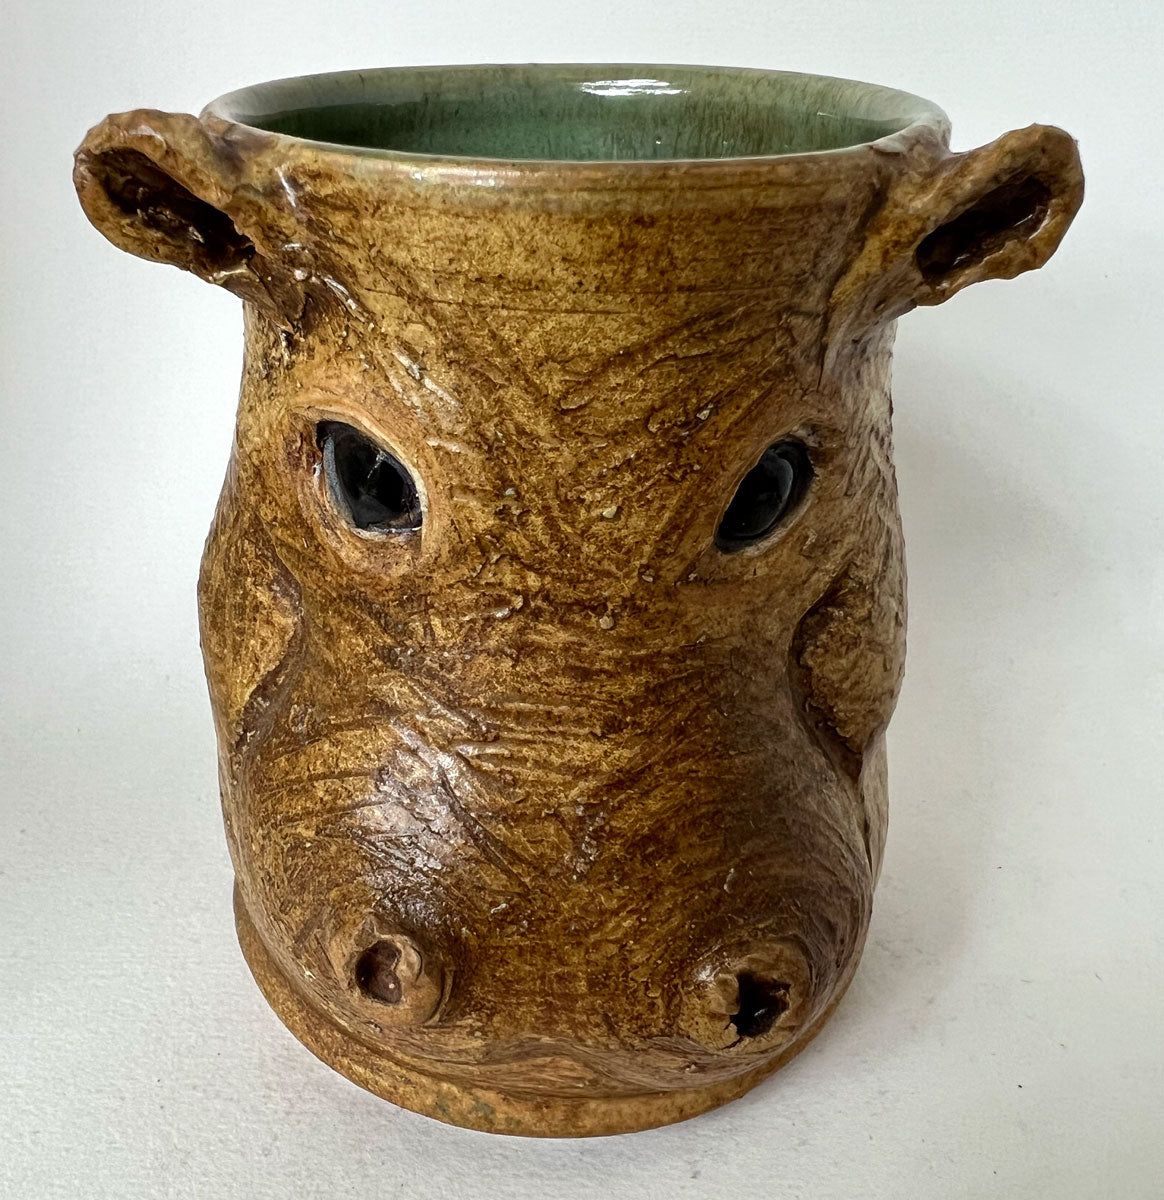 115. Hippo Mug